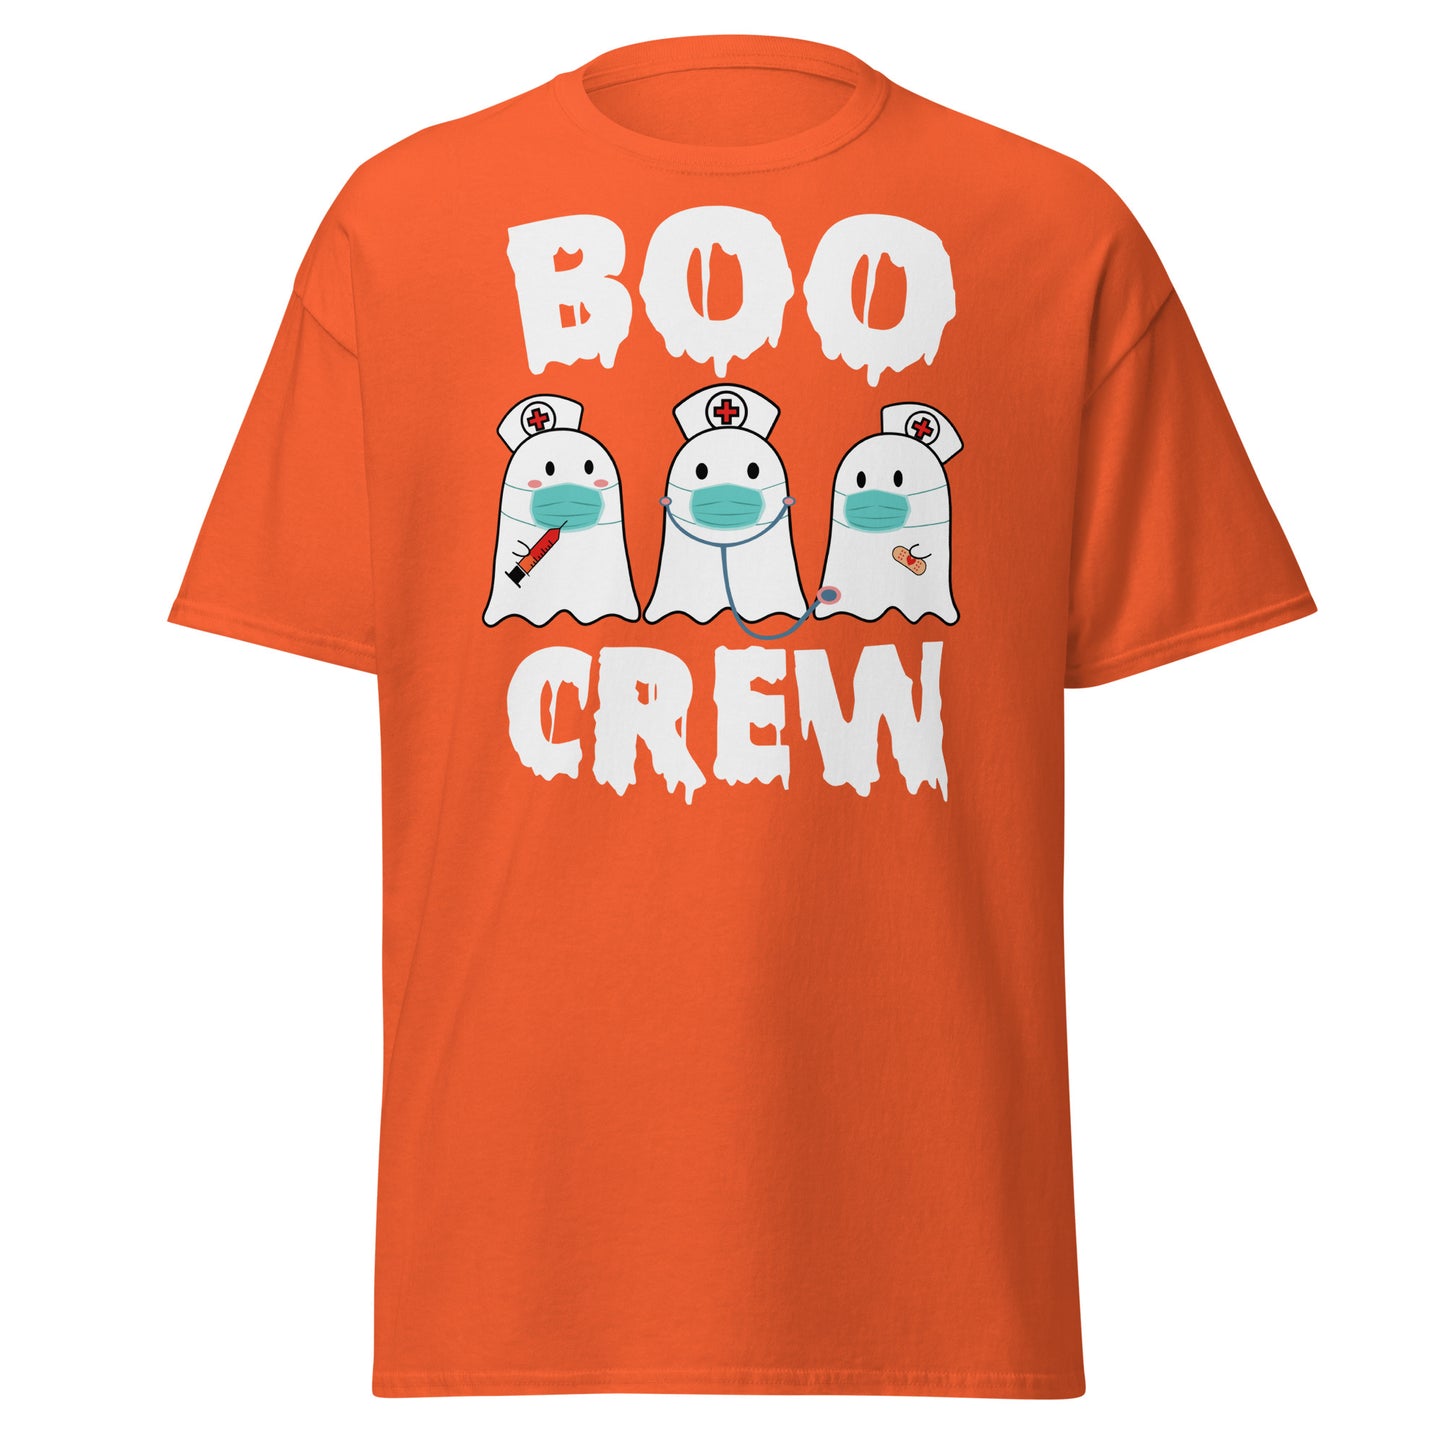 Ghostly Medical Charm: 'Boo Crew Nurse' Soft Tee